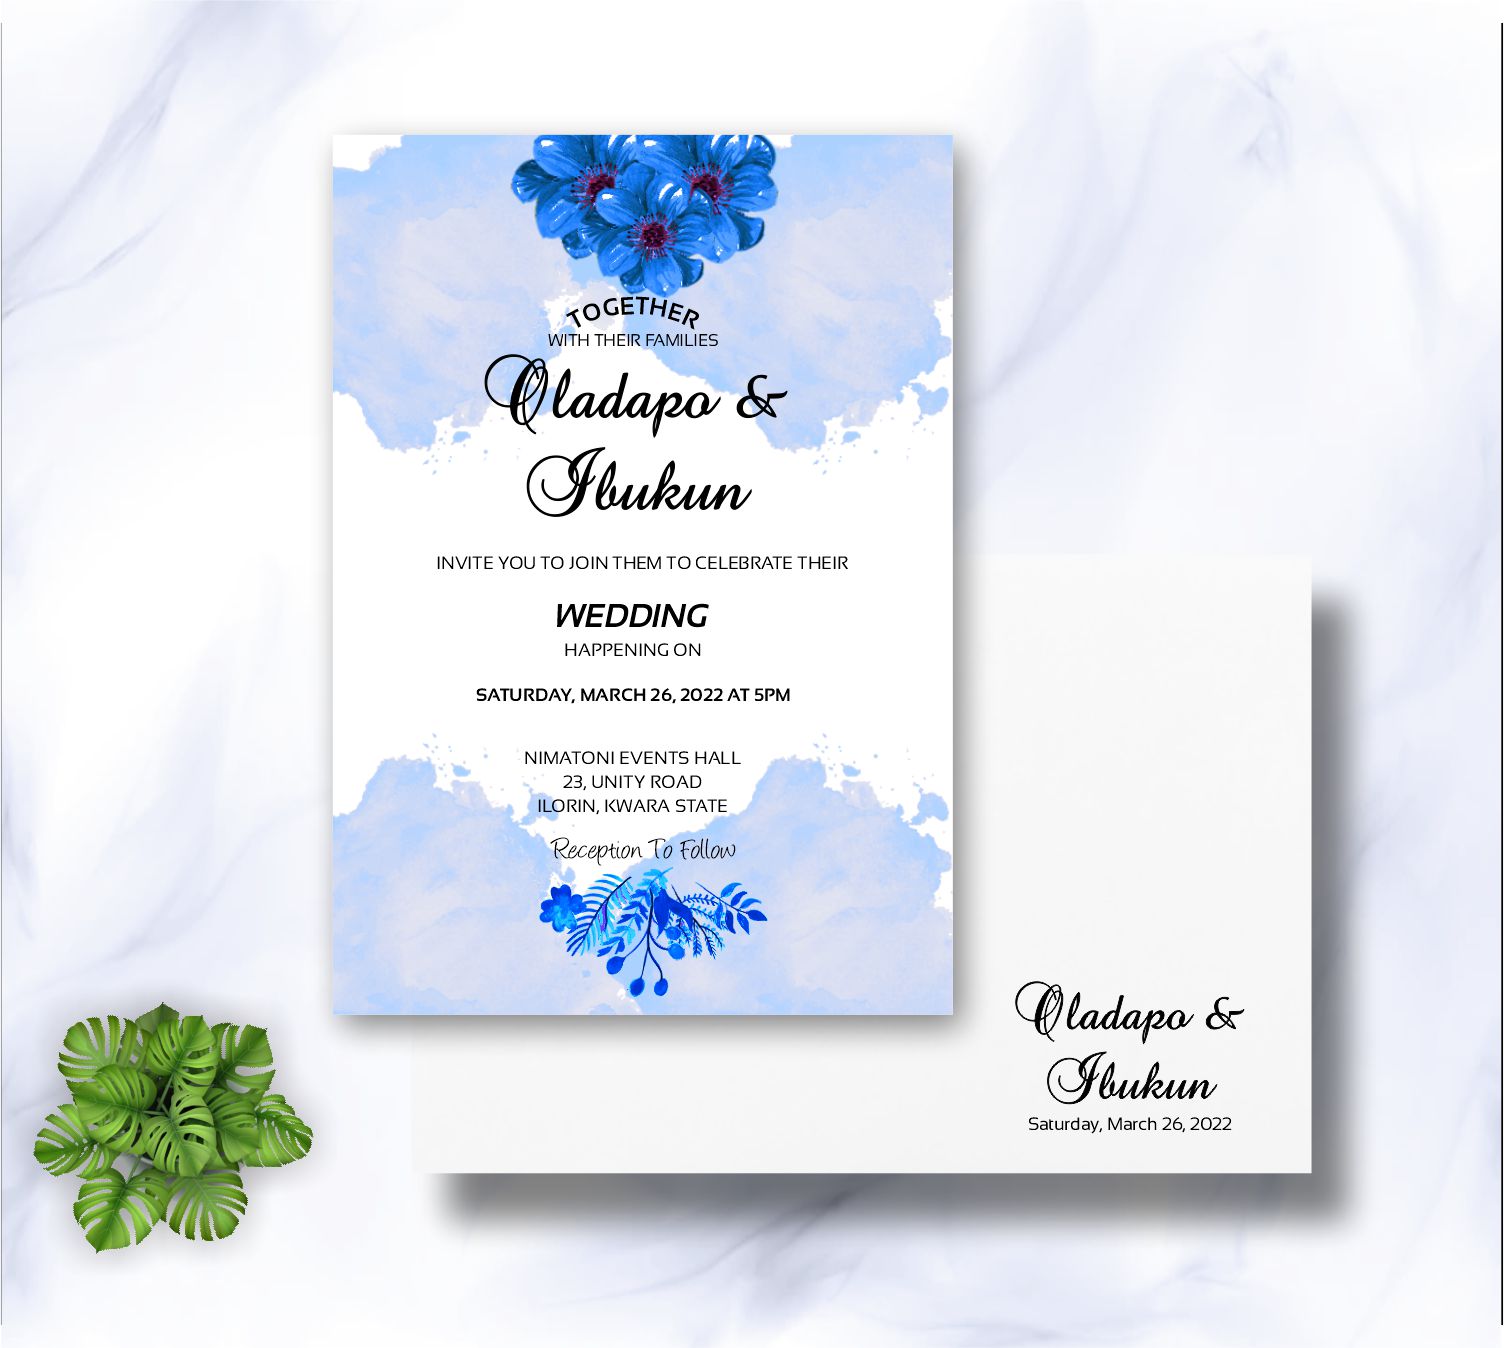 Get Yoruba Traditional Wedding Invitations Cards Design And Printing -  Design And Printing Company In Kwara State, Nigeria